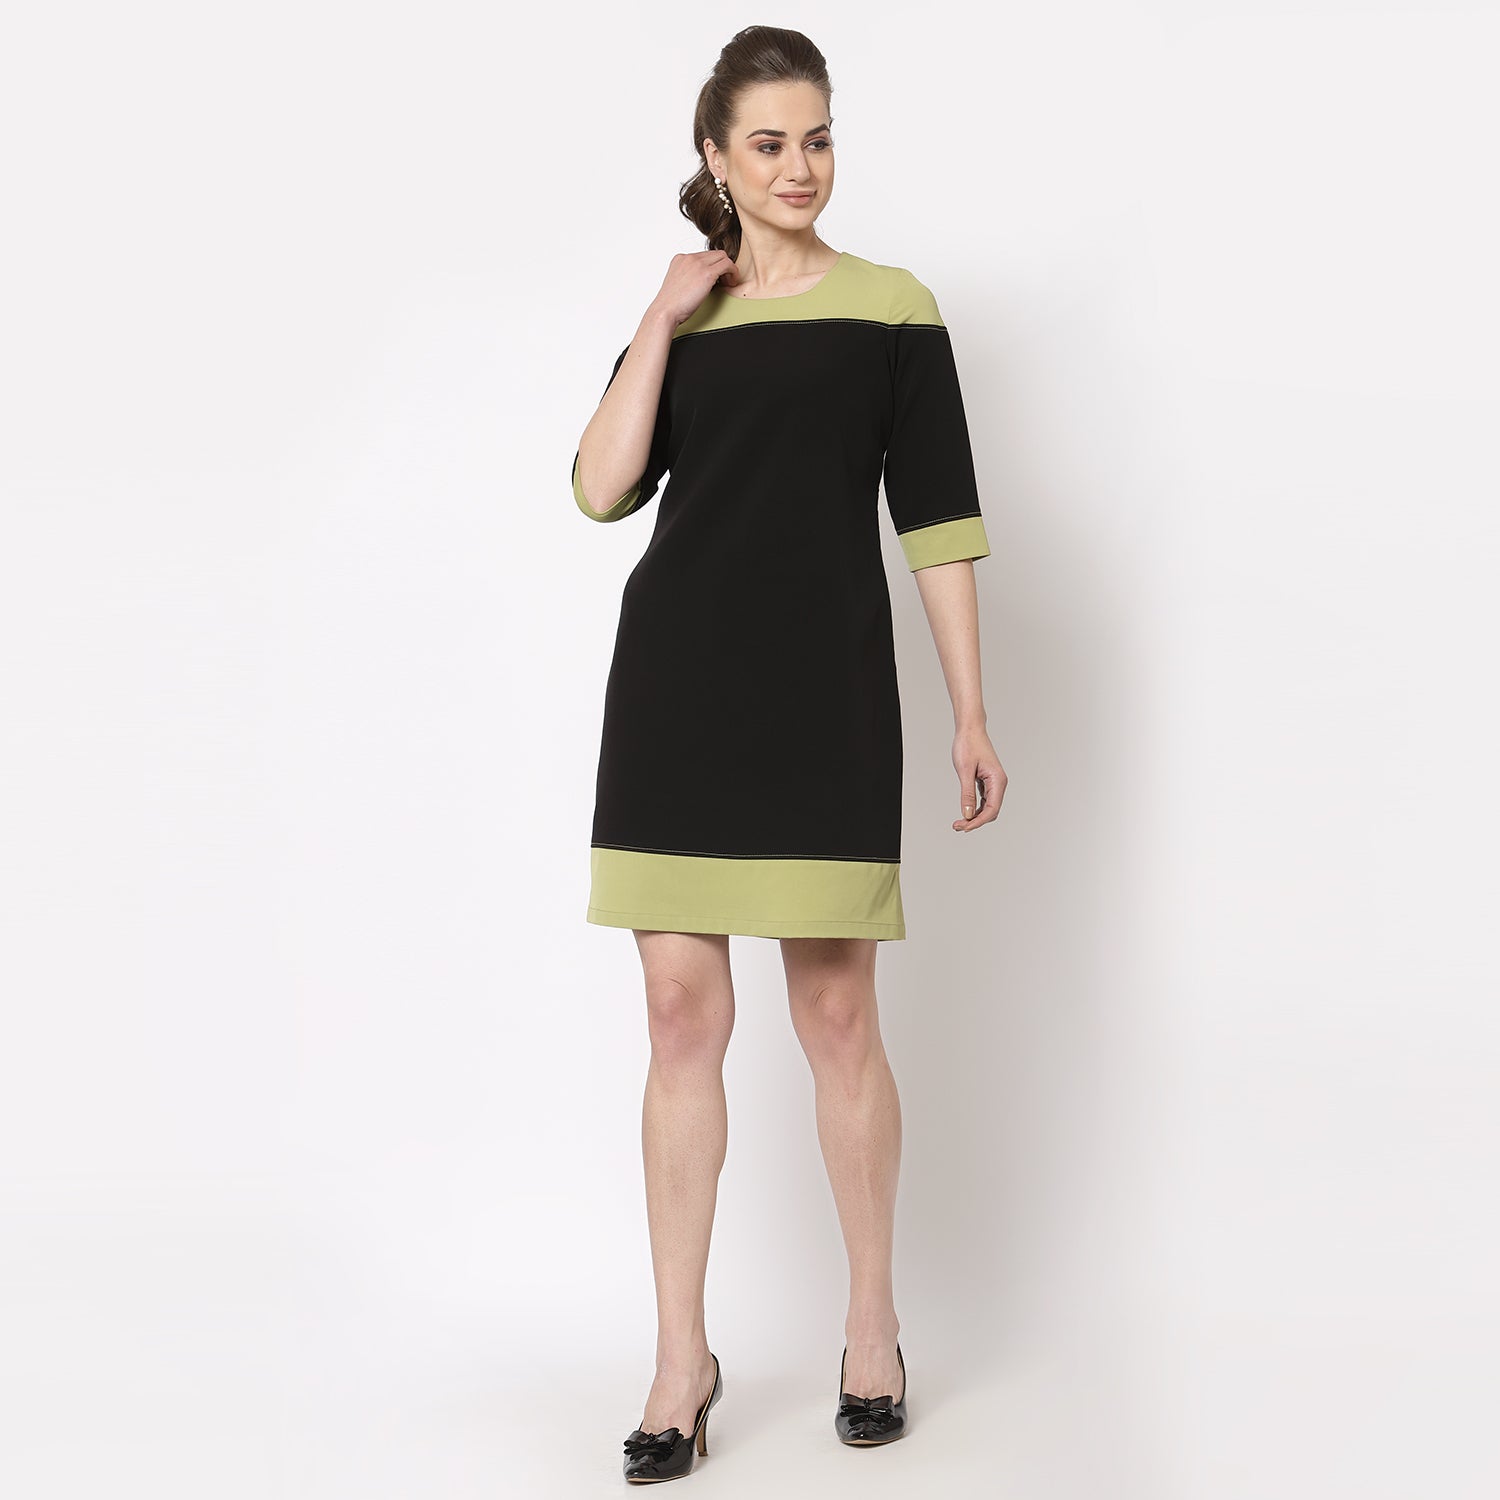 Black & olive top stitch dress